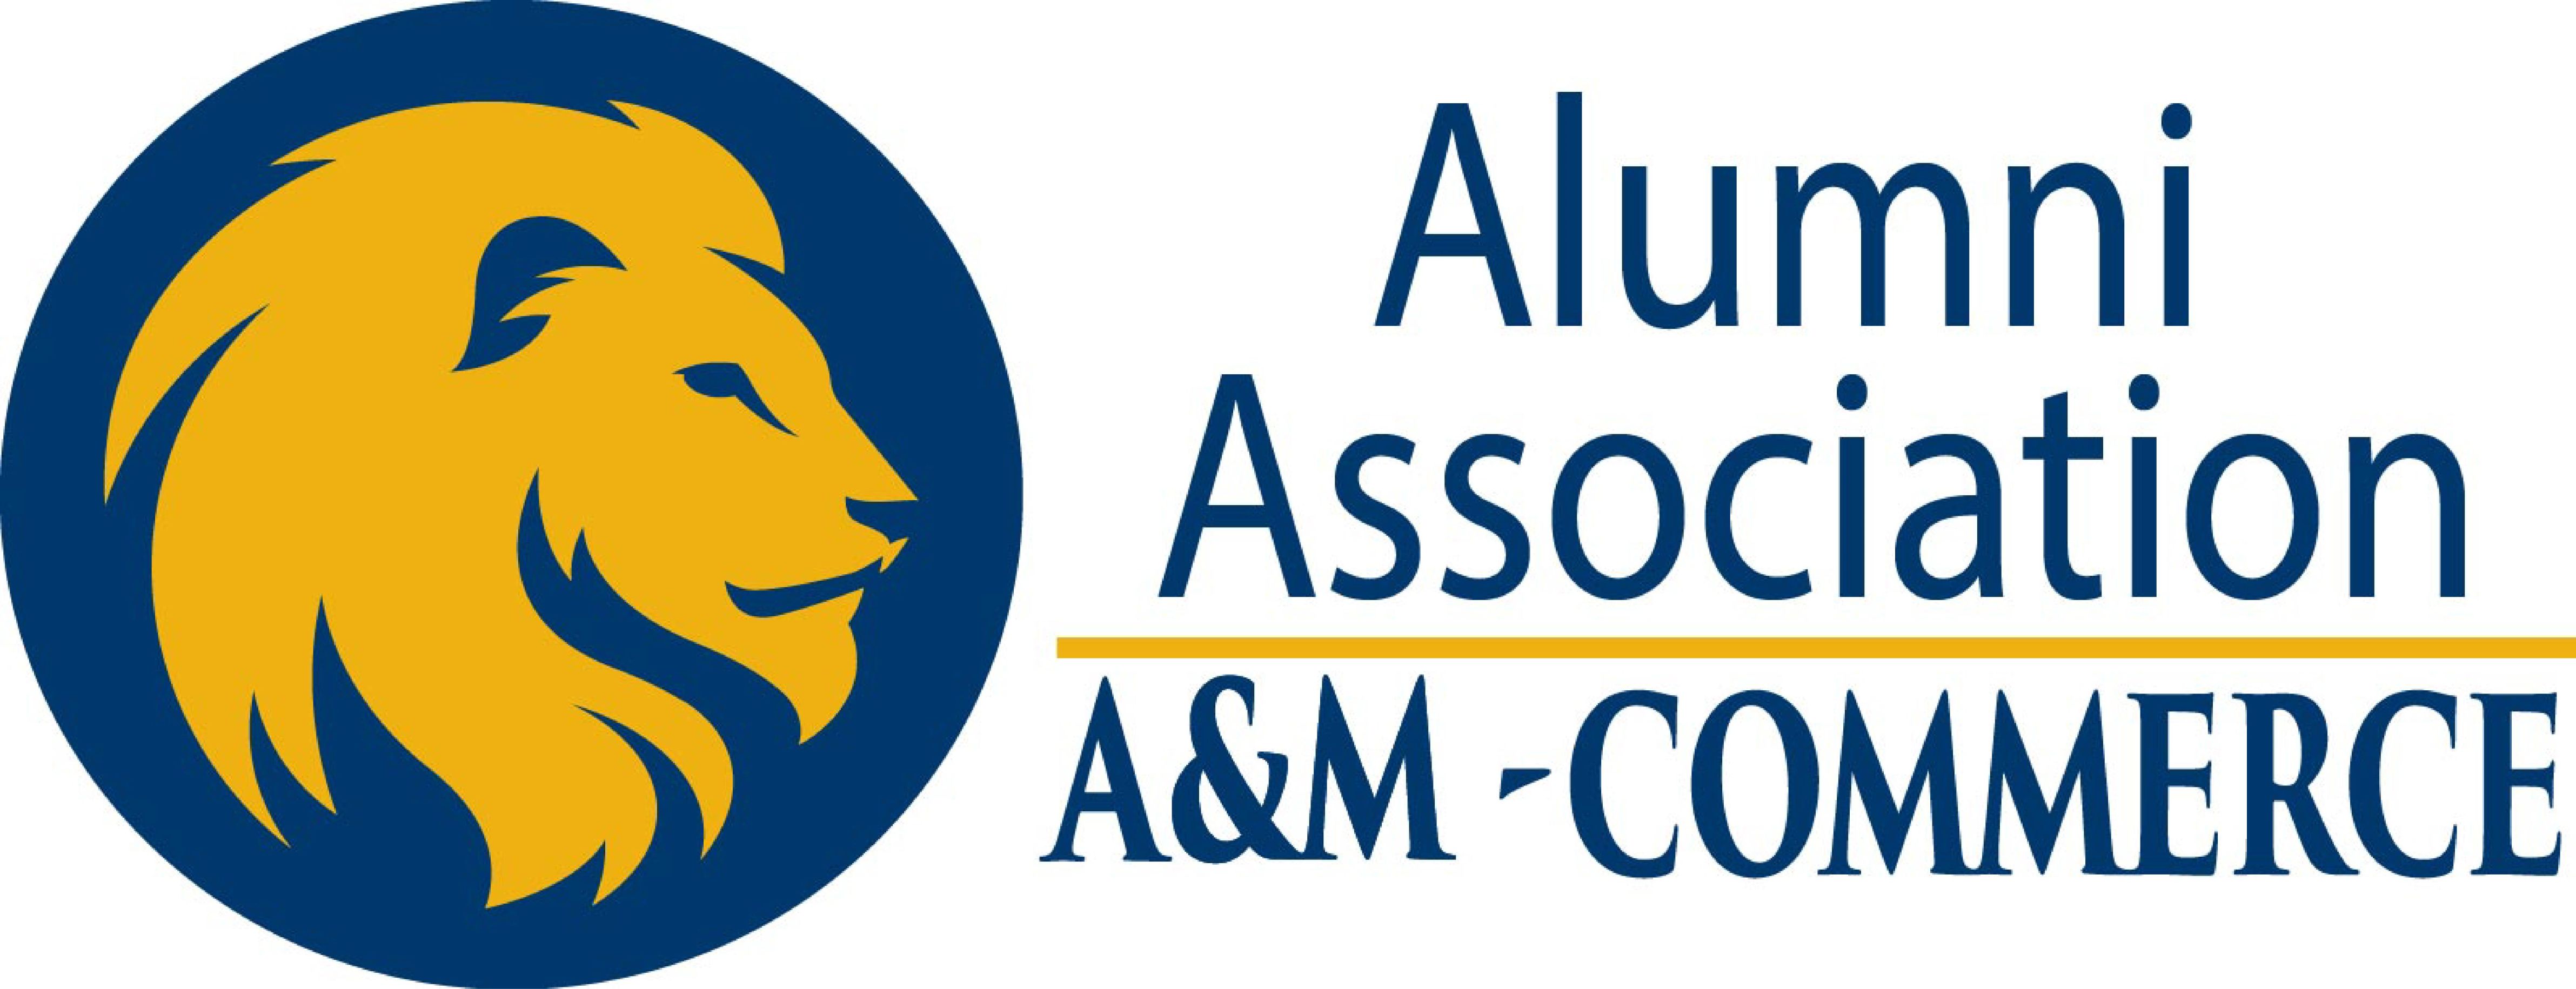 Alumni Association Membership